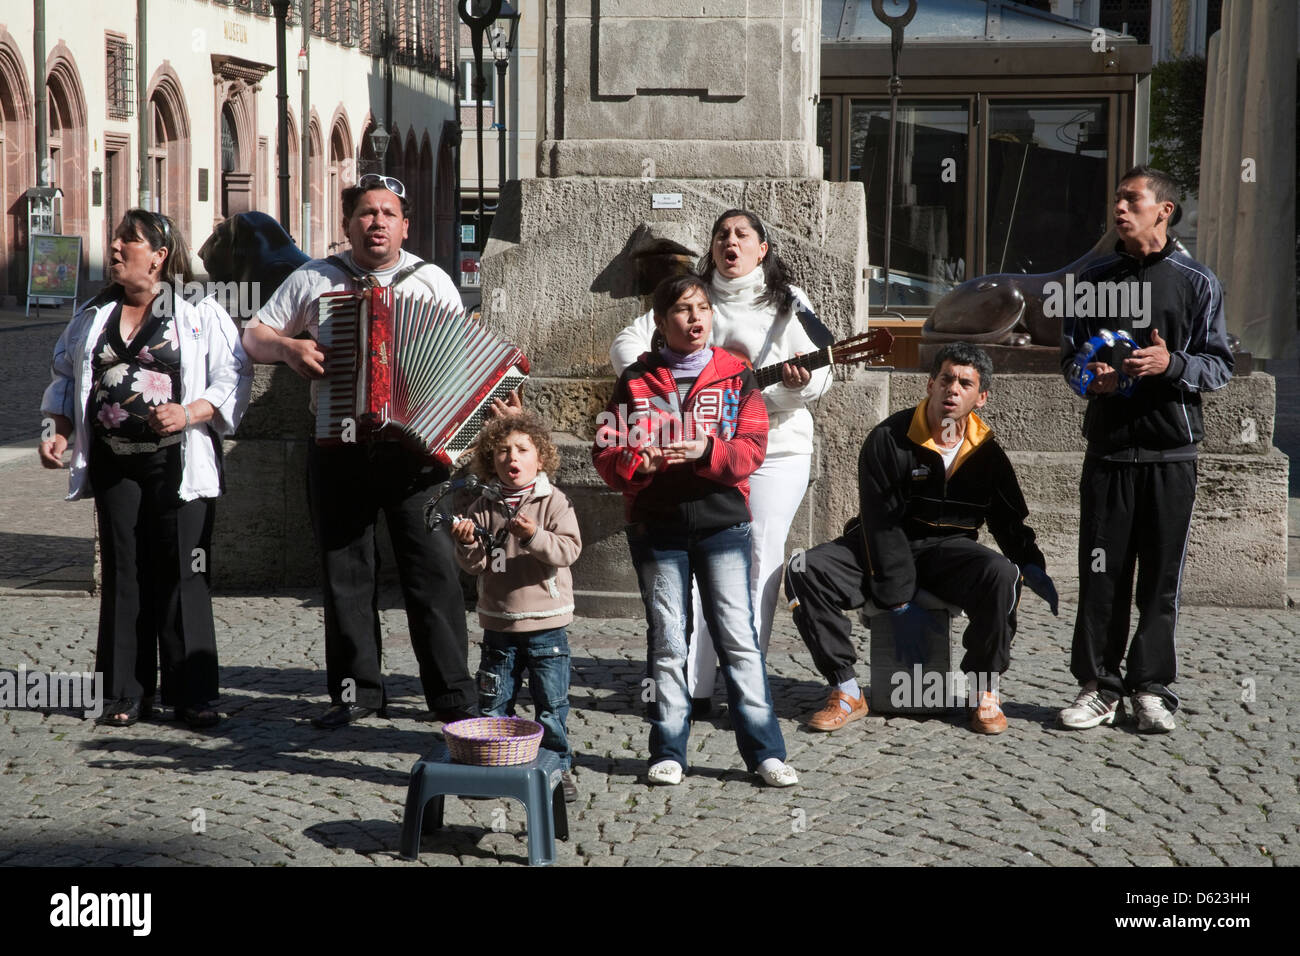 Hispanic family of street musicians on popular Grimmaische pedestrian shopping street in Leipzig, Germany. Stock Photo